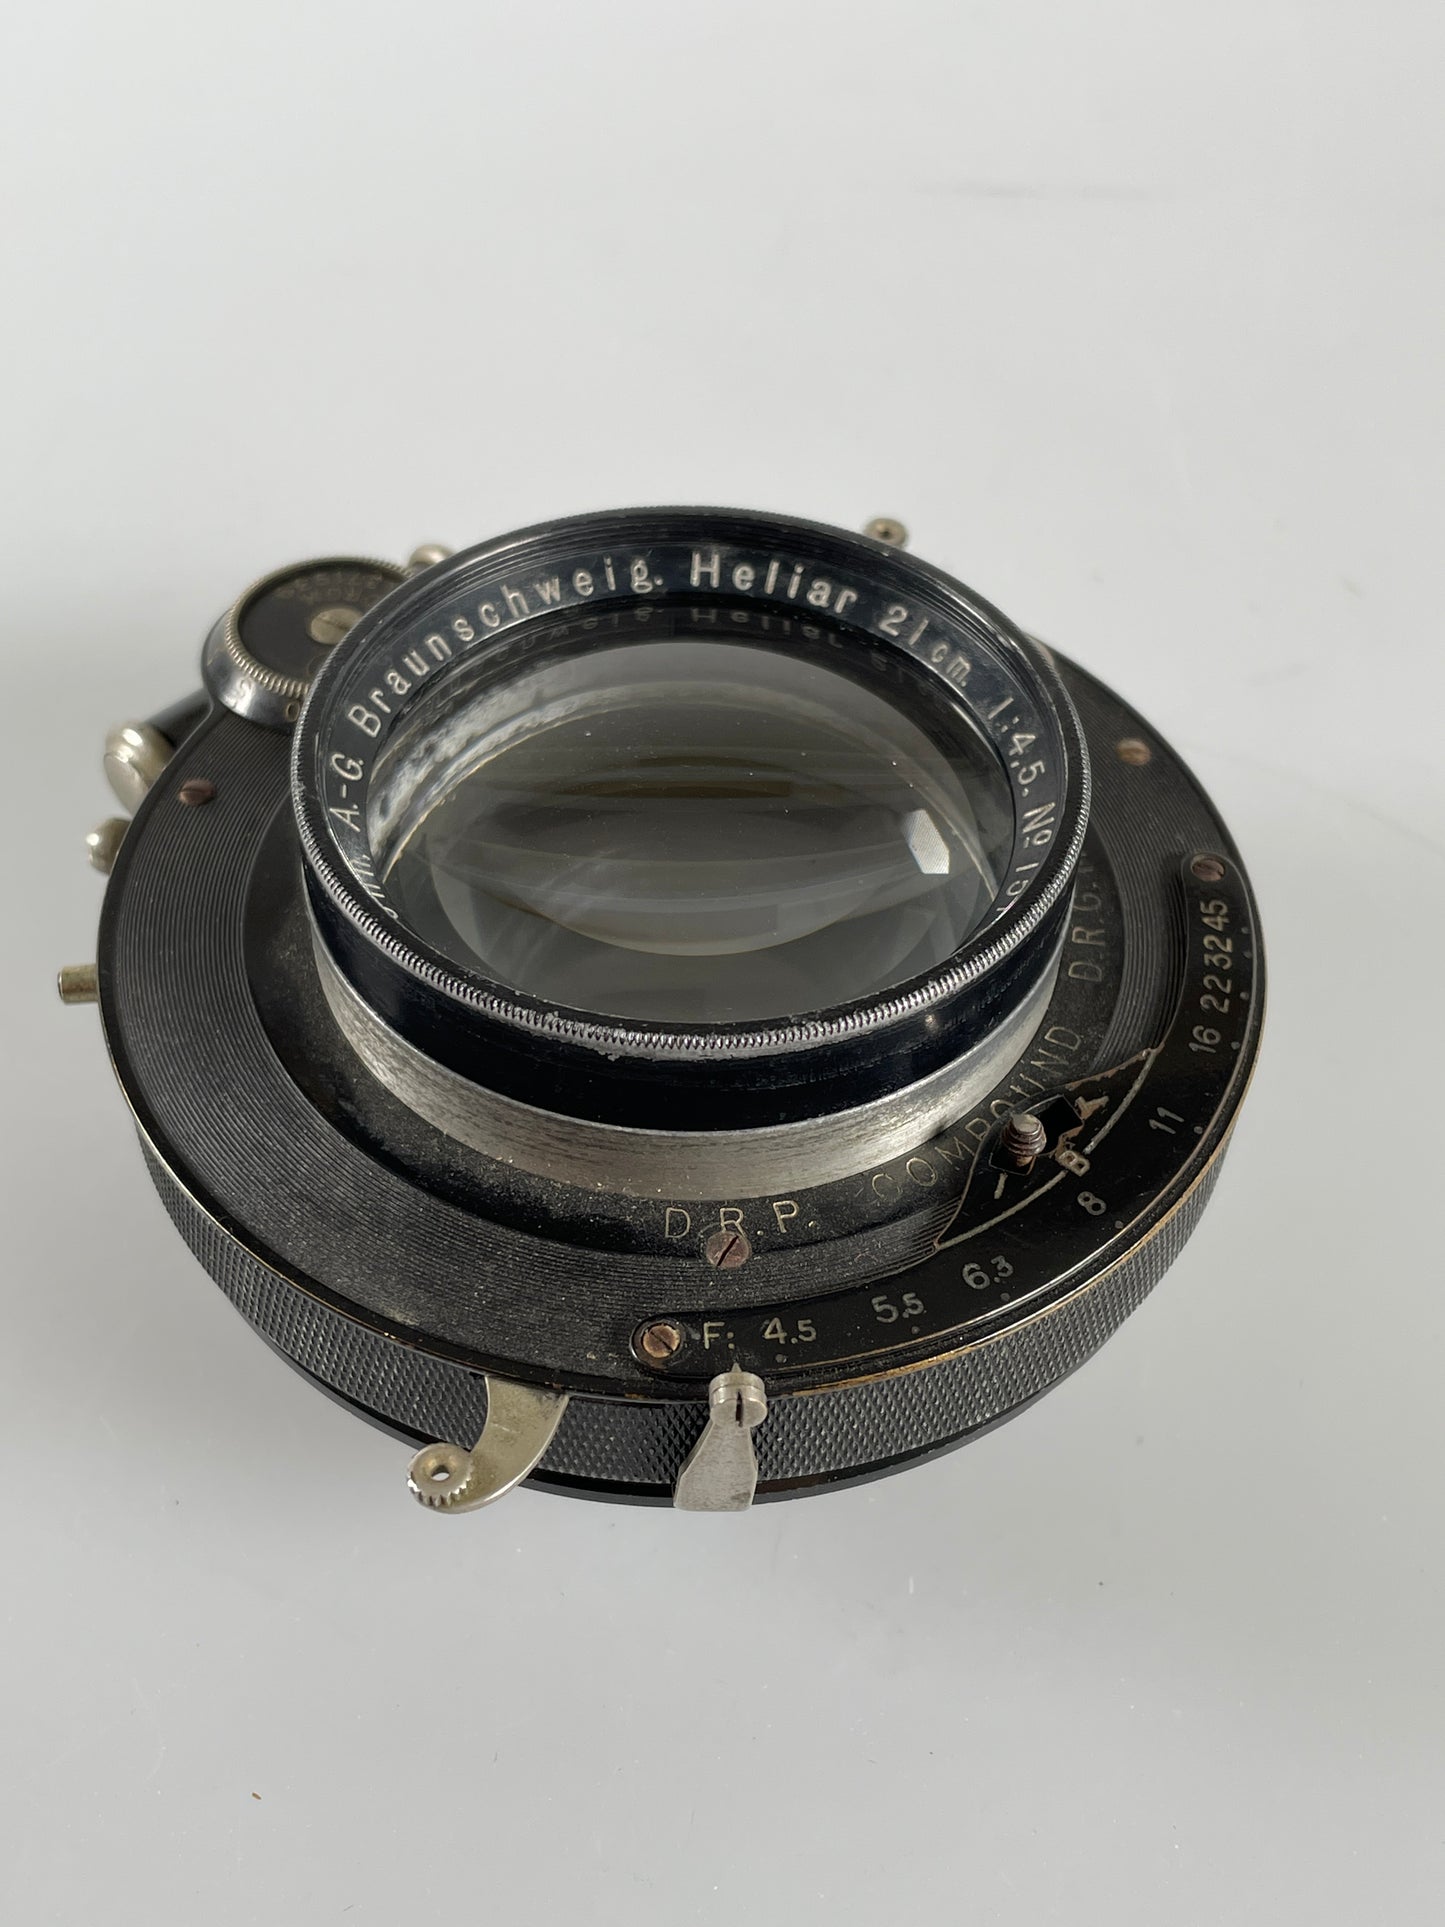 Voigtlander Sohn Heliar 21cm 210mm f4.5 large format lens